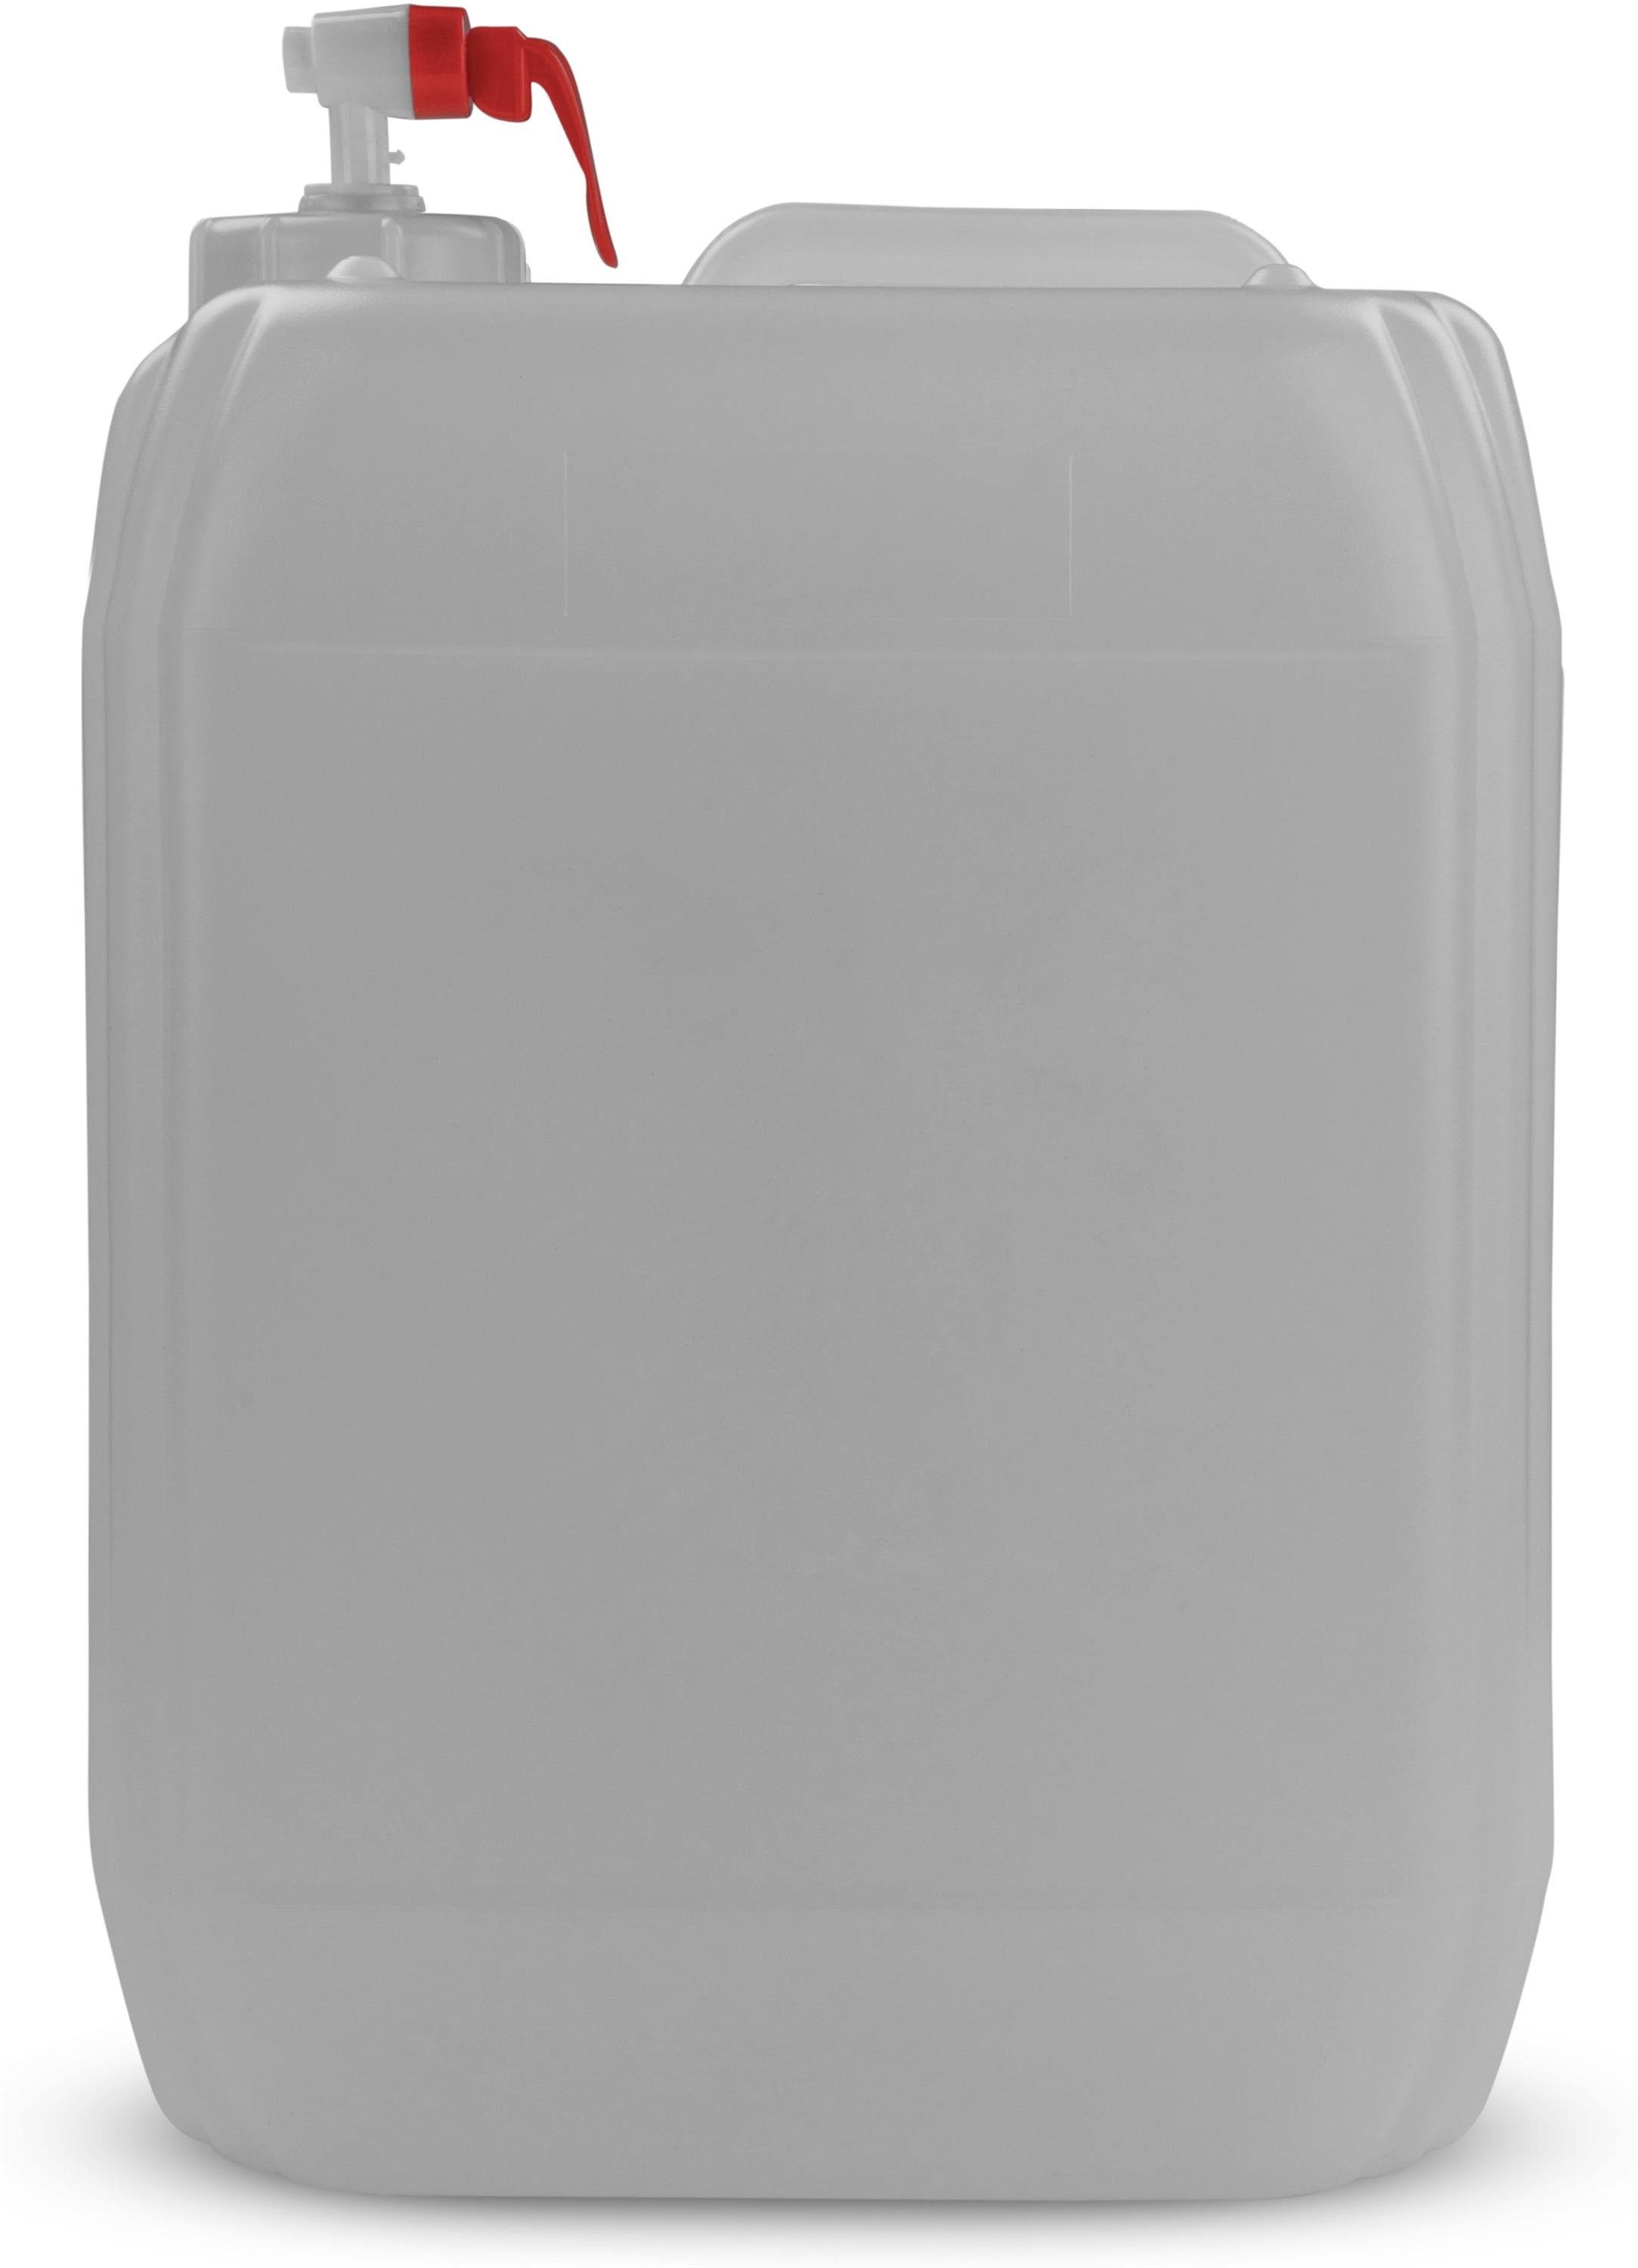 St), normani Hahn Wasserkanister Liter Campingkanister Wasserbehälter Carry mit (1 Lebensmittelecht Kanister Outdoorkanister Trinkwasserkanister 20